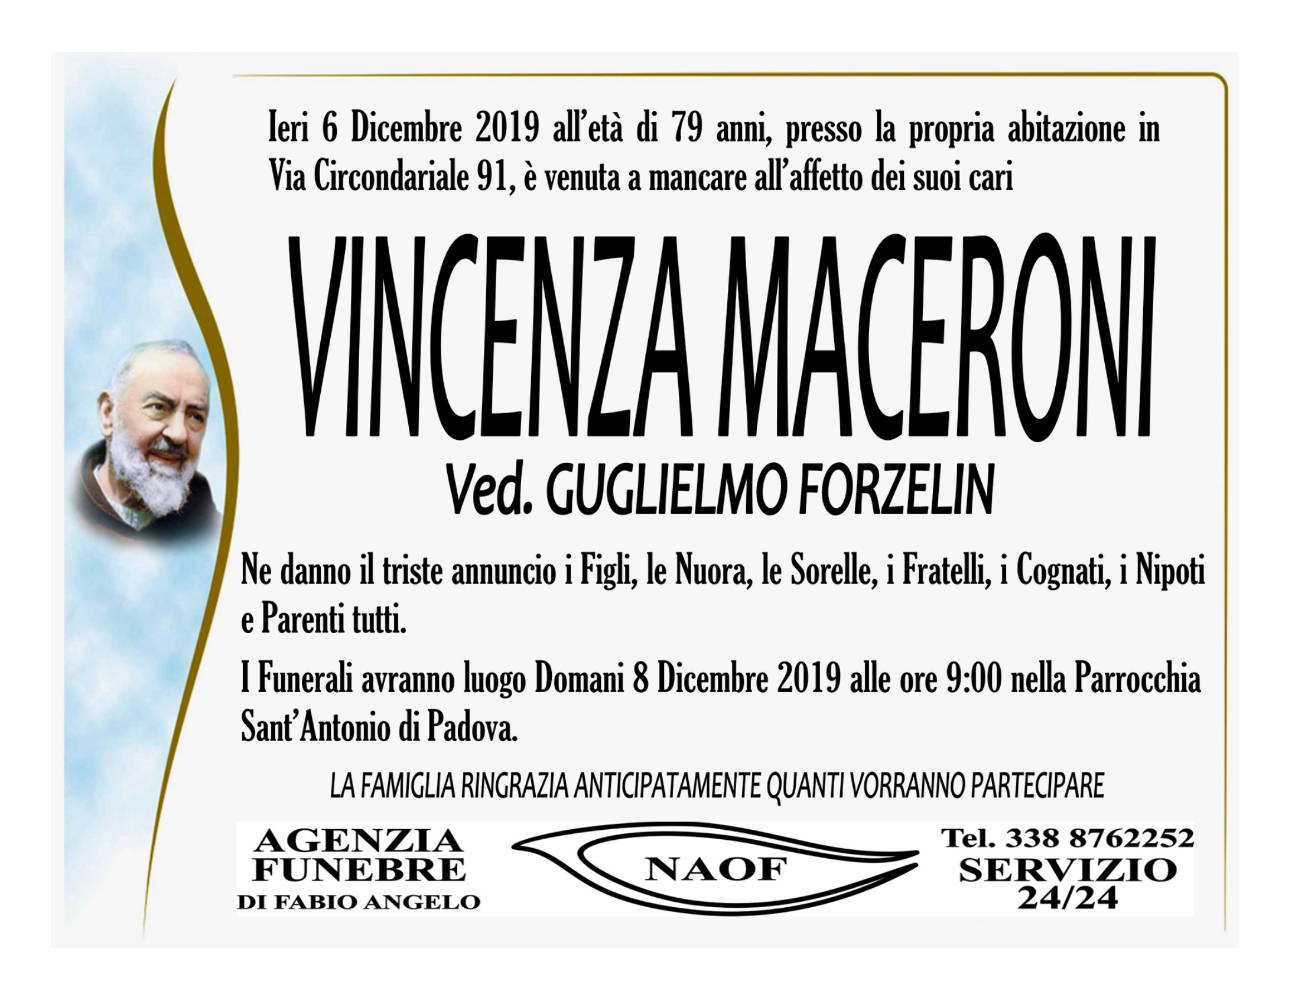 Vincenza Maceroni